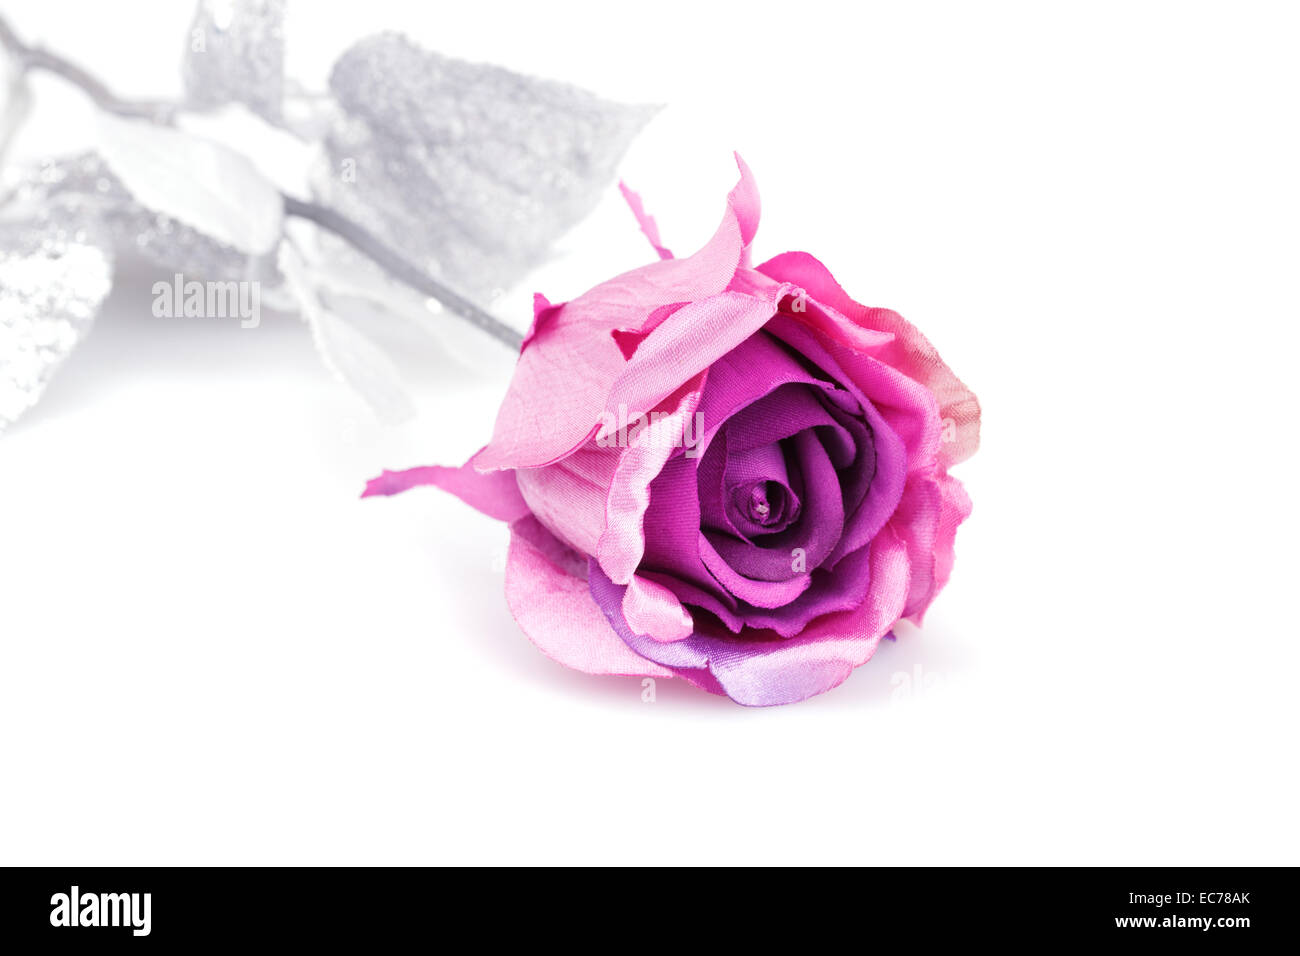 https://c8.alamy.com/comp/EC78AK/pink-rose-isolated-on-white-background-EC78AK.jpg